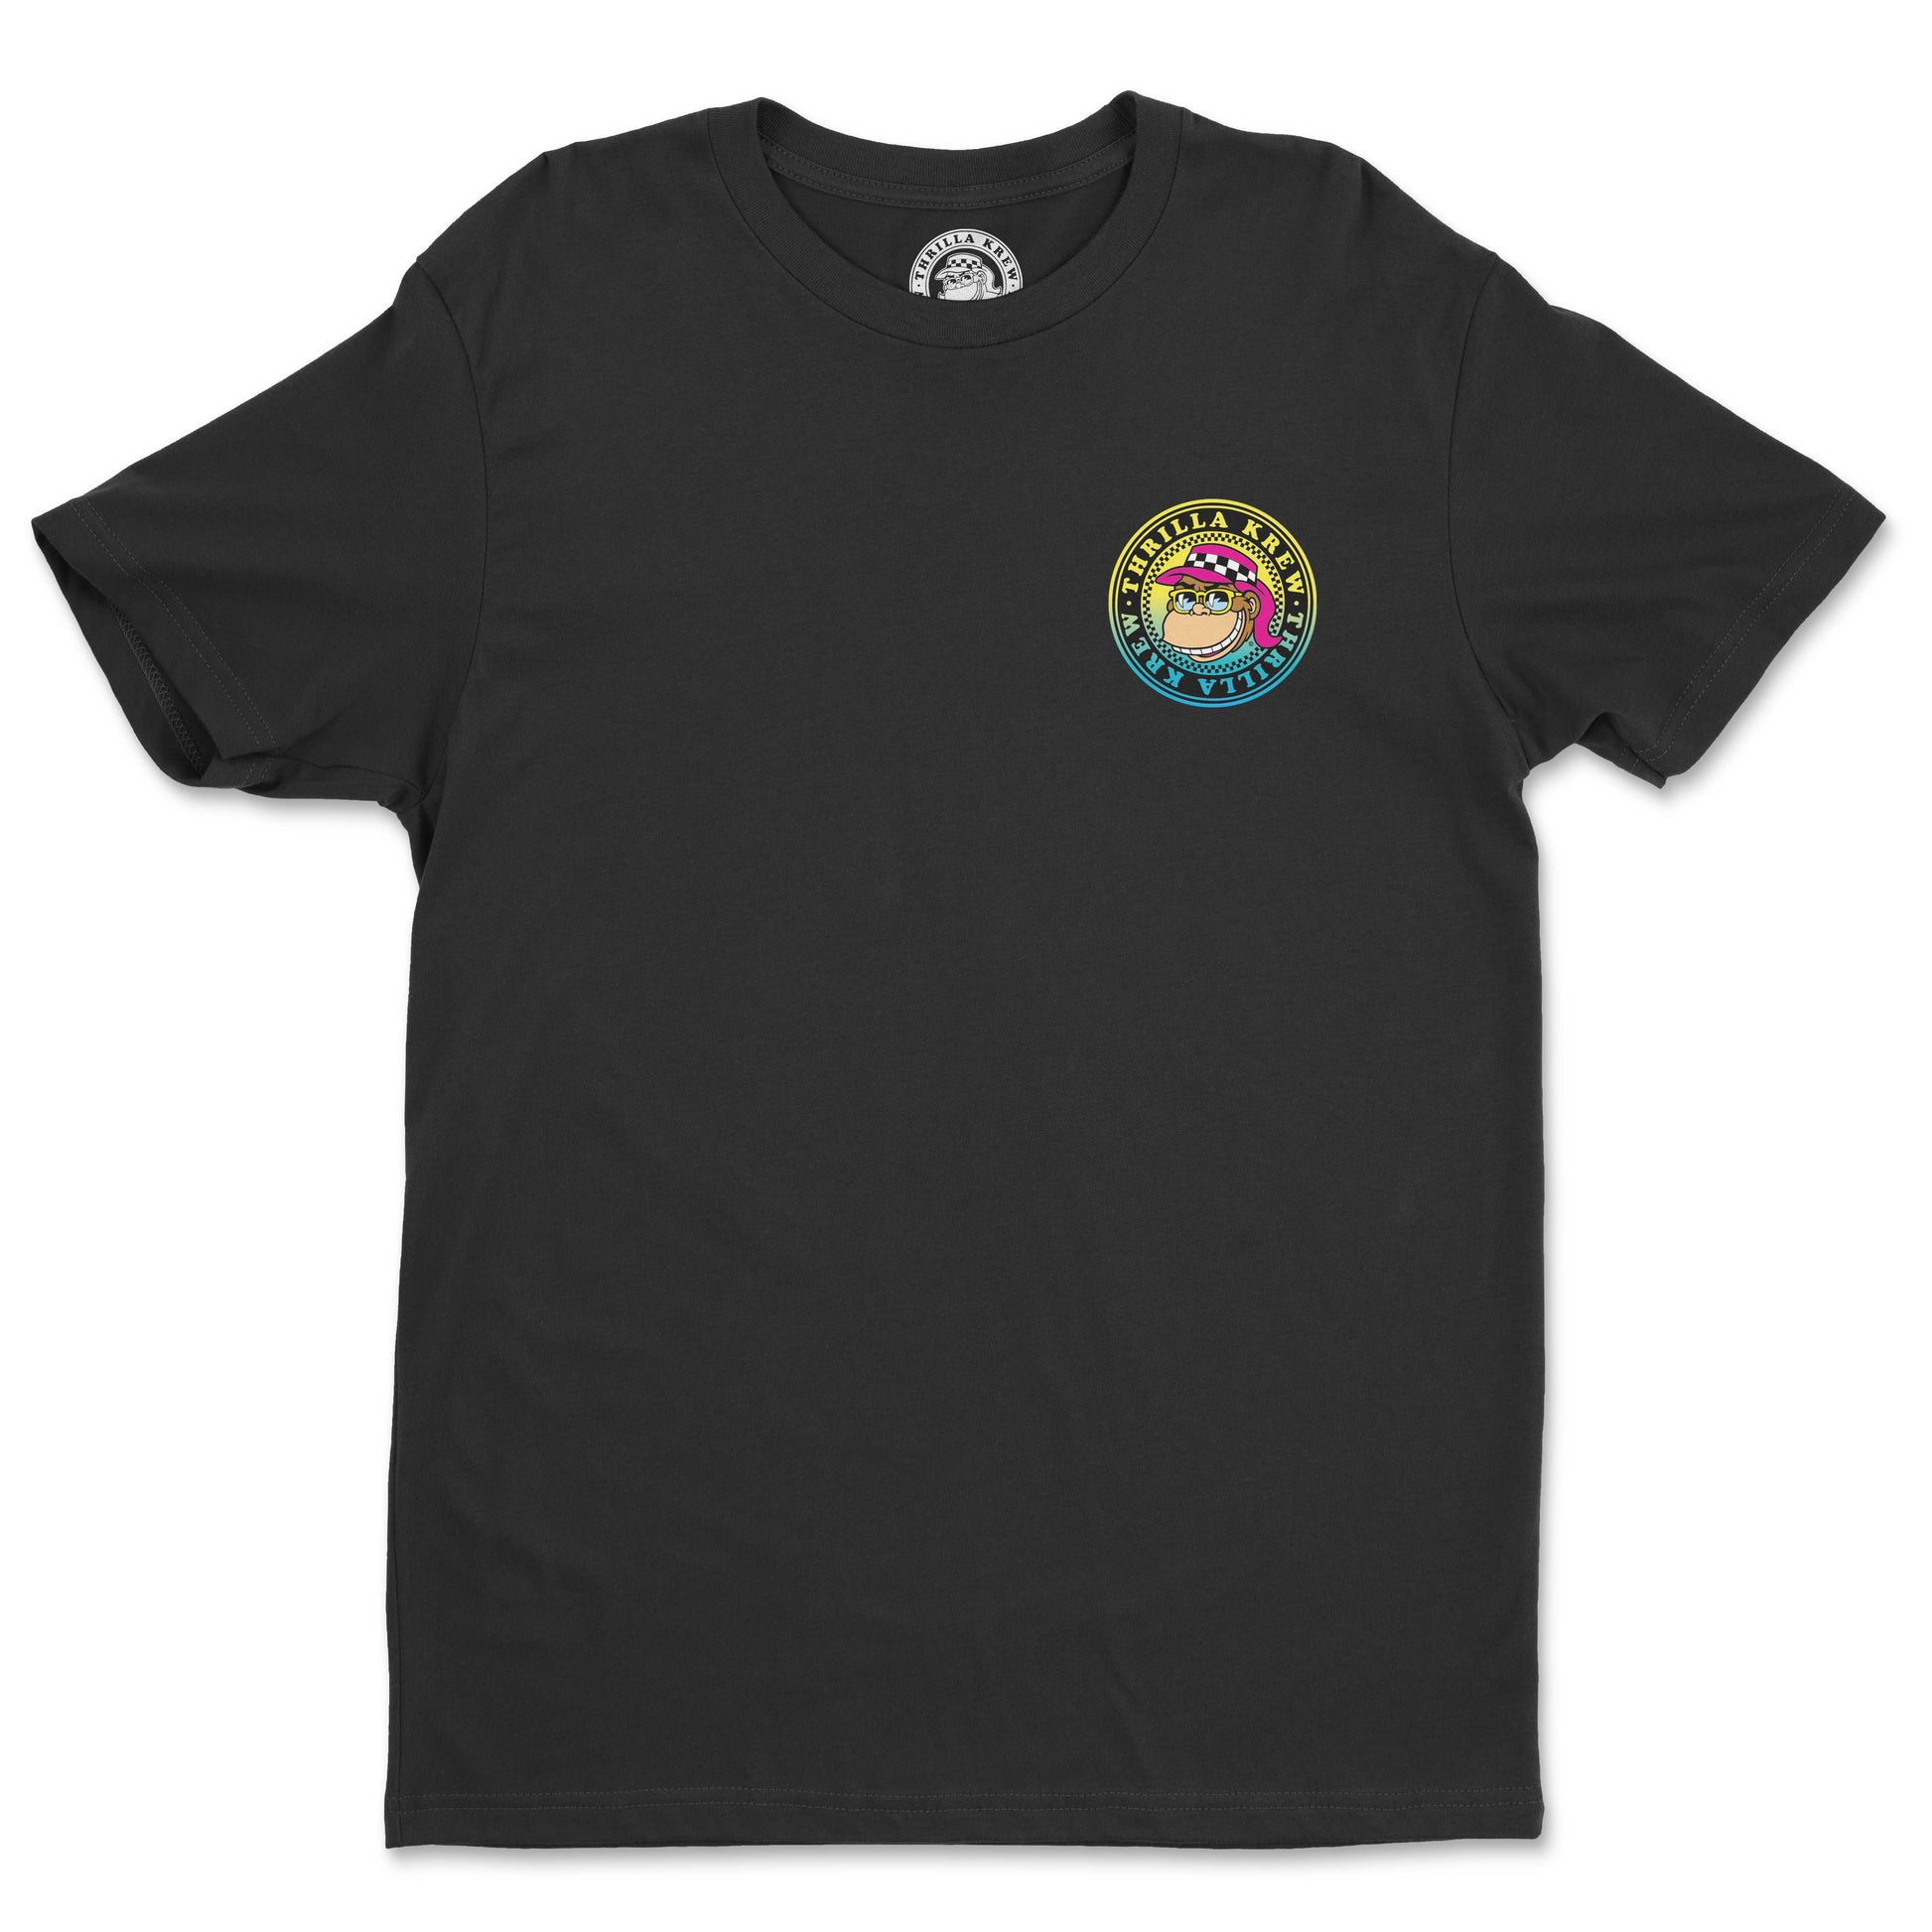 Gorilla: Classic T-Shirt - Go Shape Nutrition